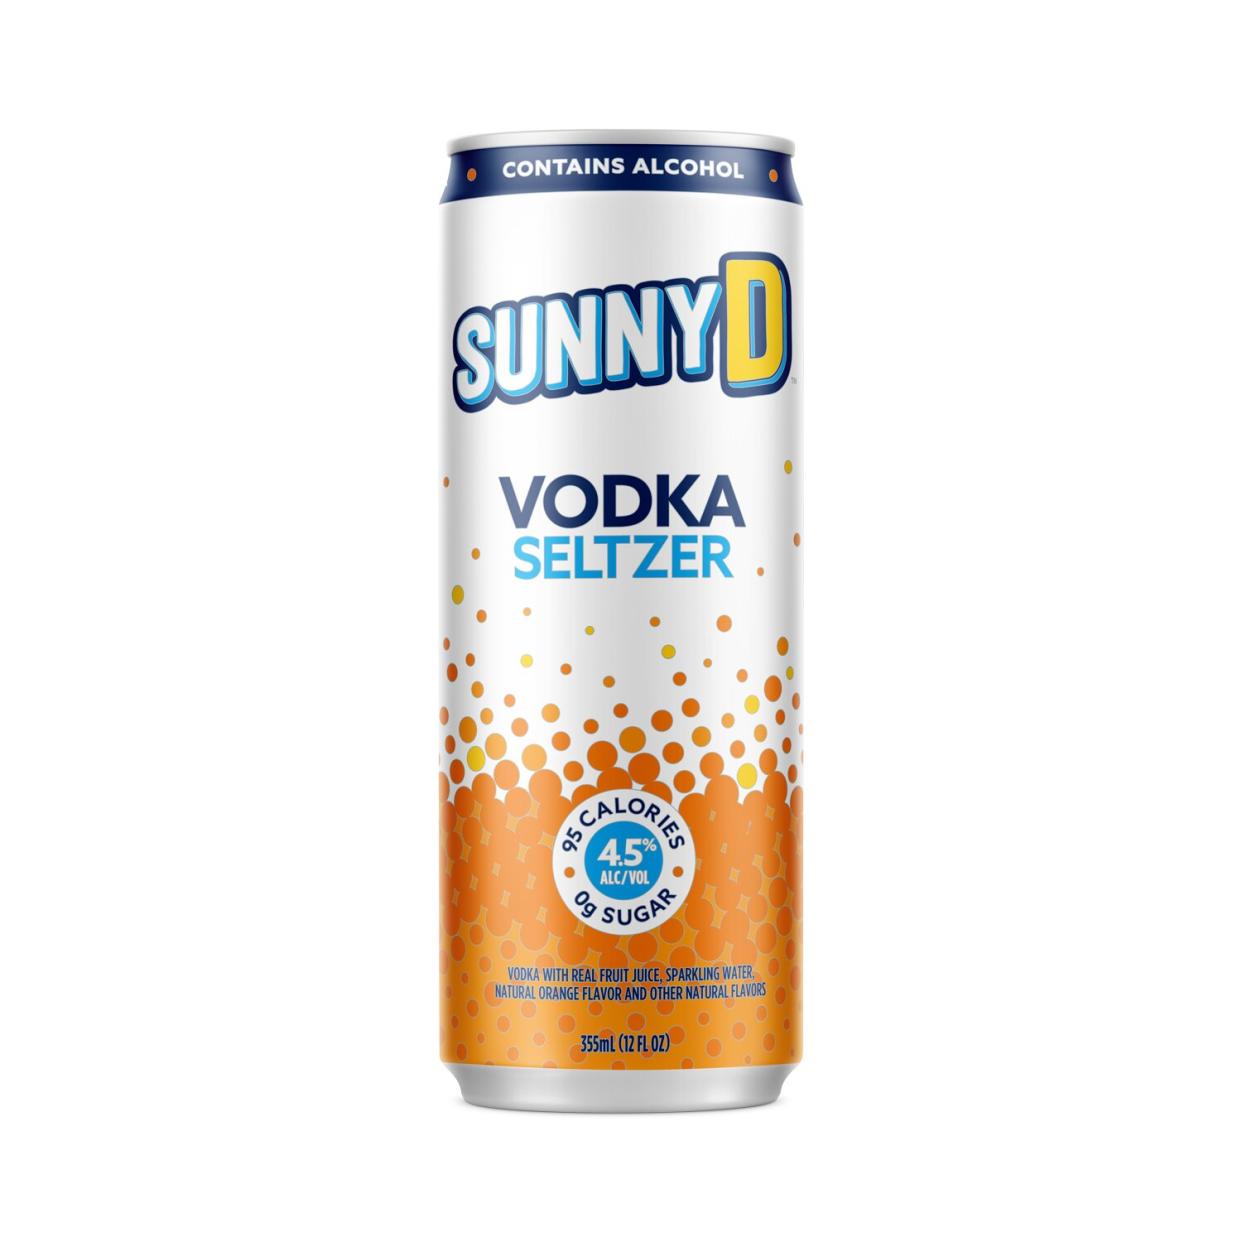 SunnyD Grows Up, Debuts Vodka Seltzer